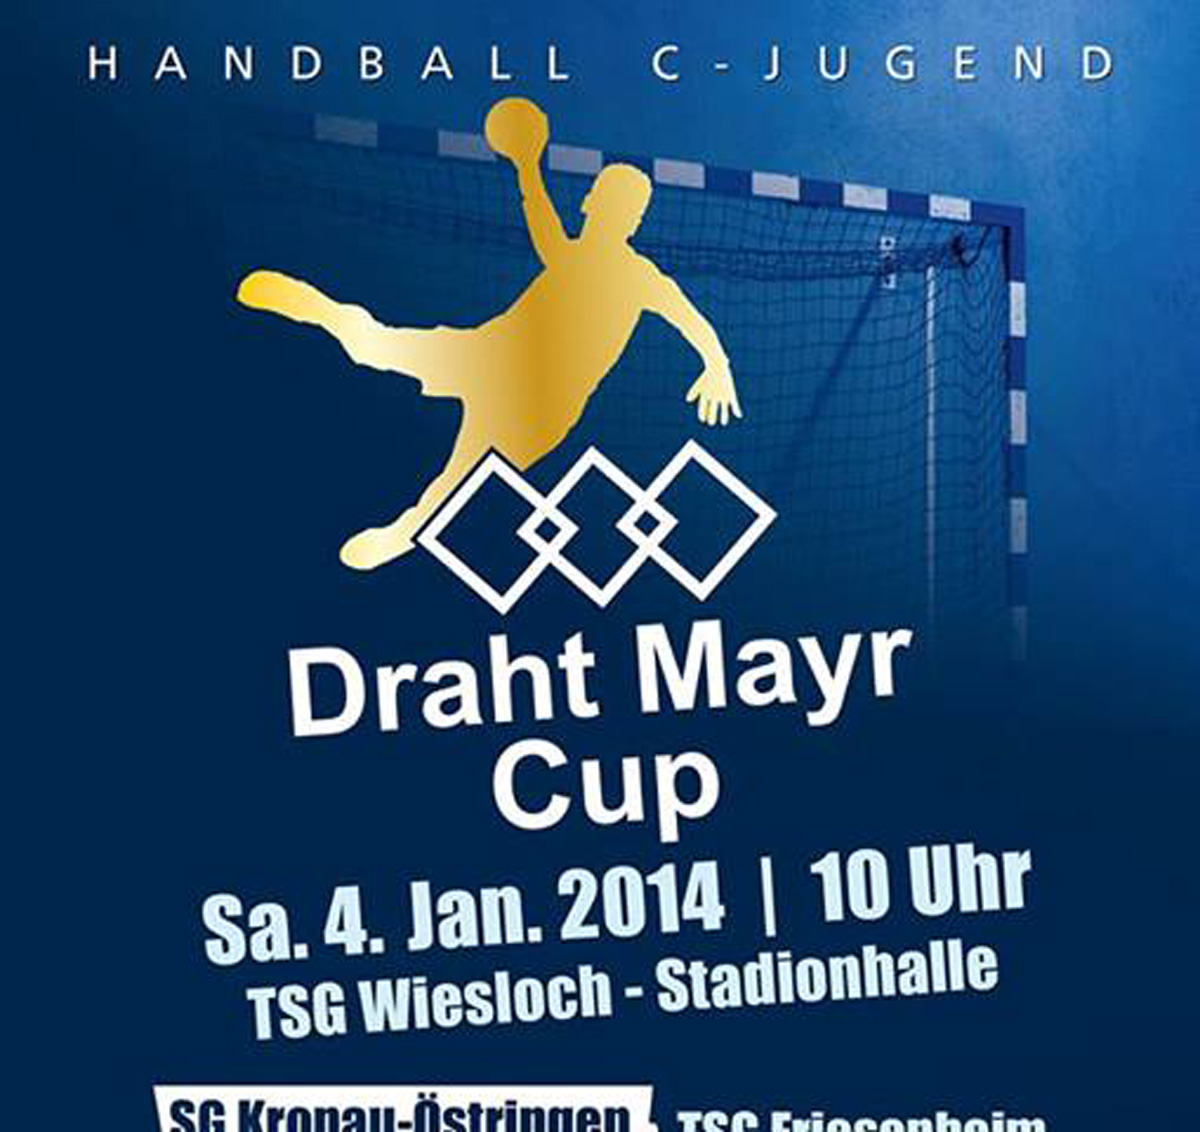 Draht-Mayr-Cup Jugendhandball-Turniere